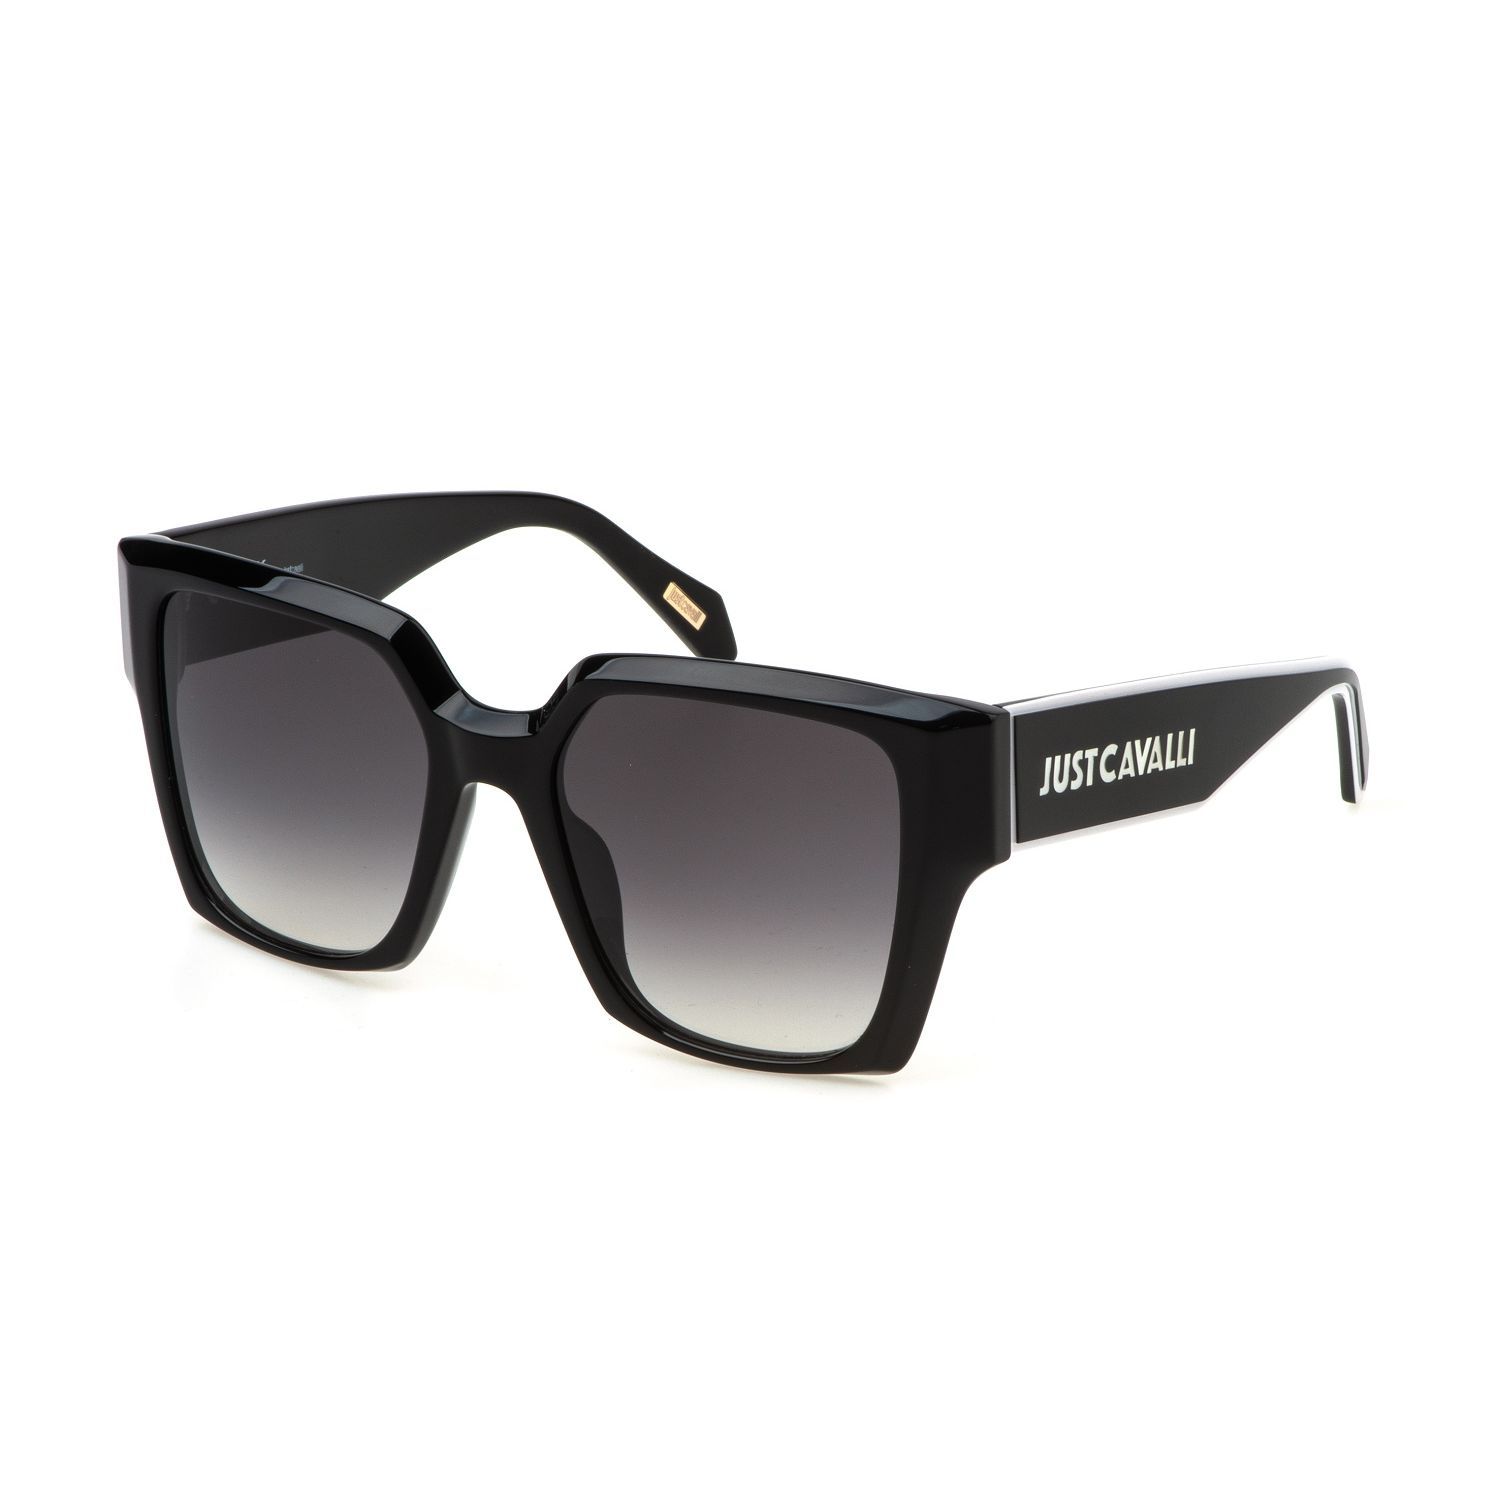 SJC091V Square Sunglasses 700F - size 53